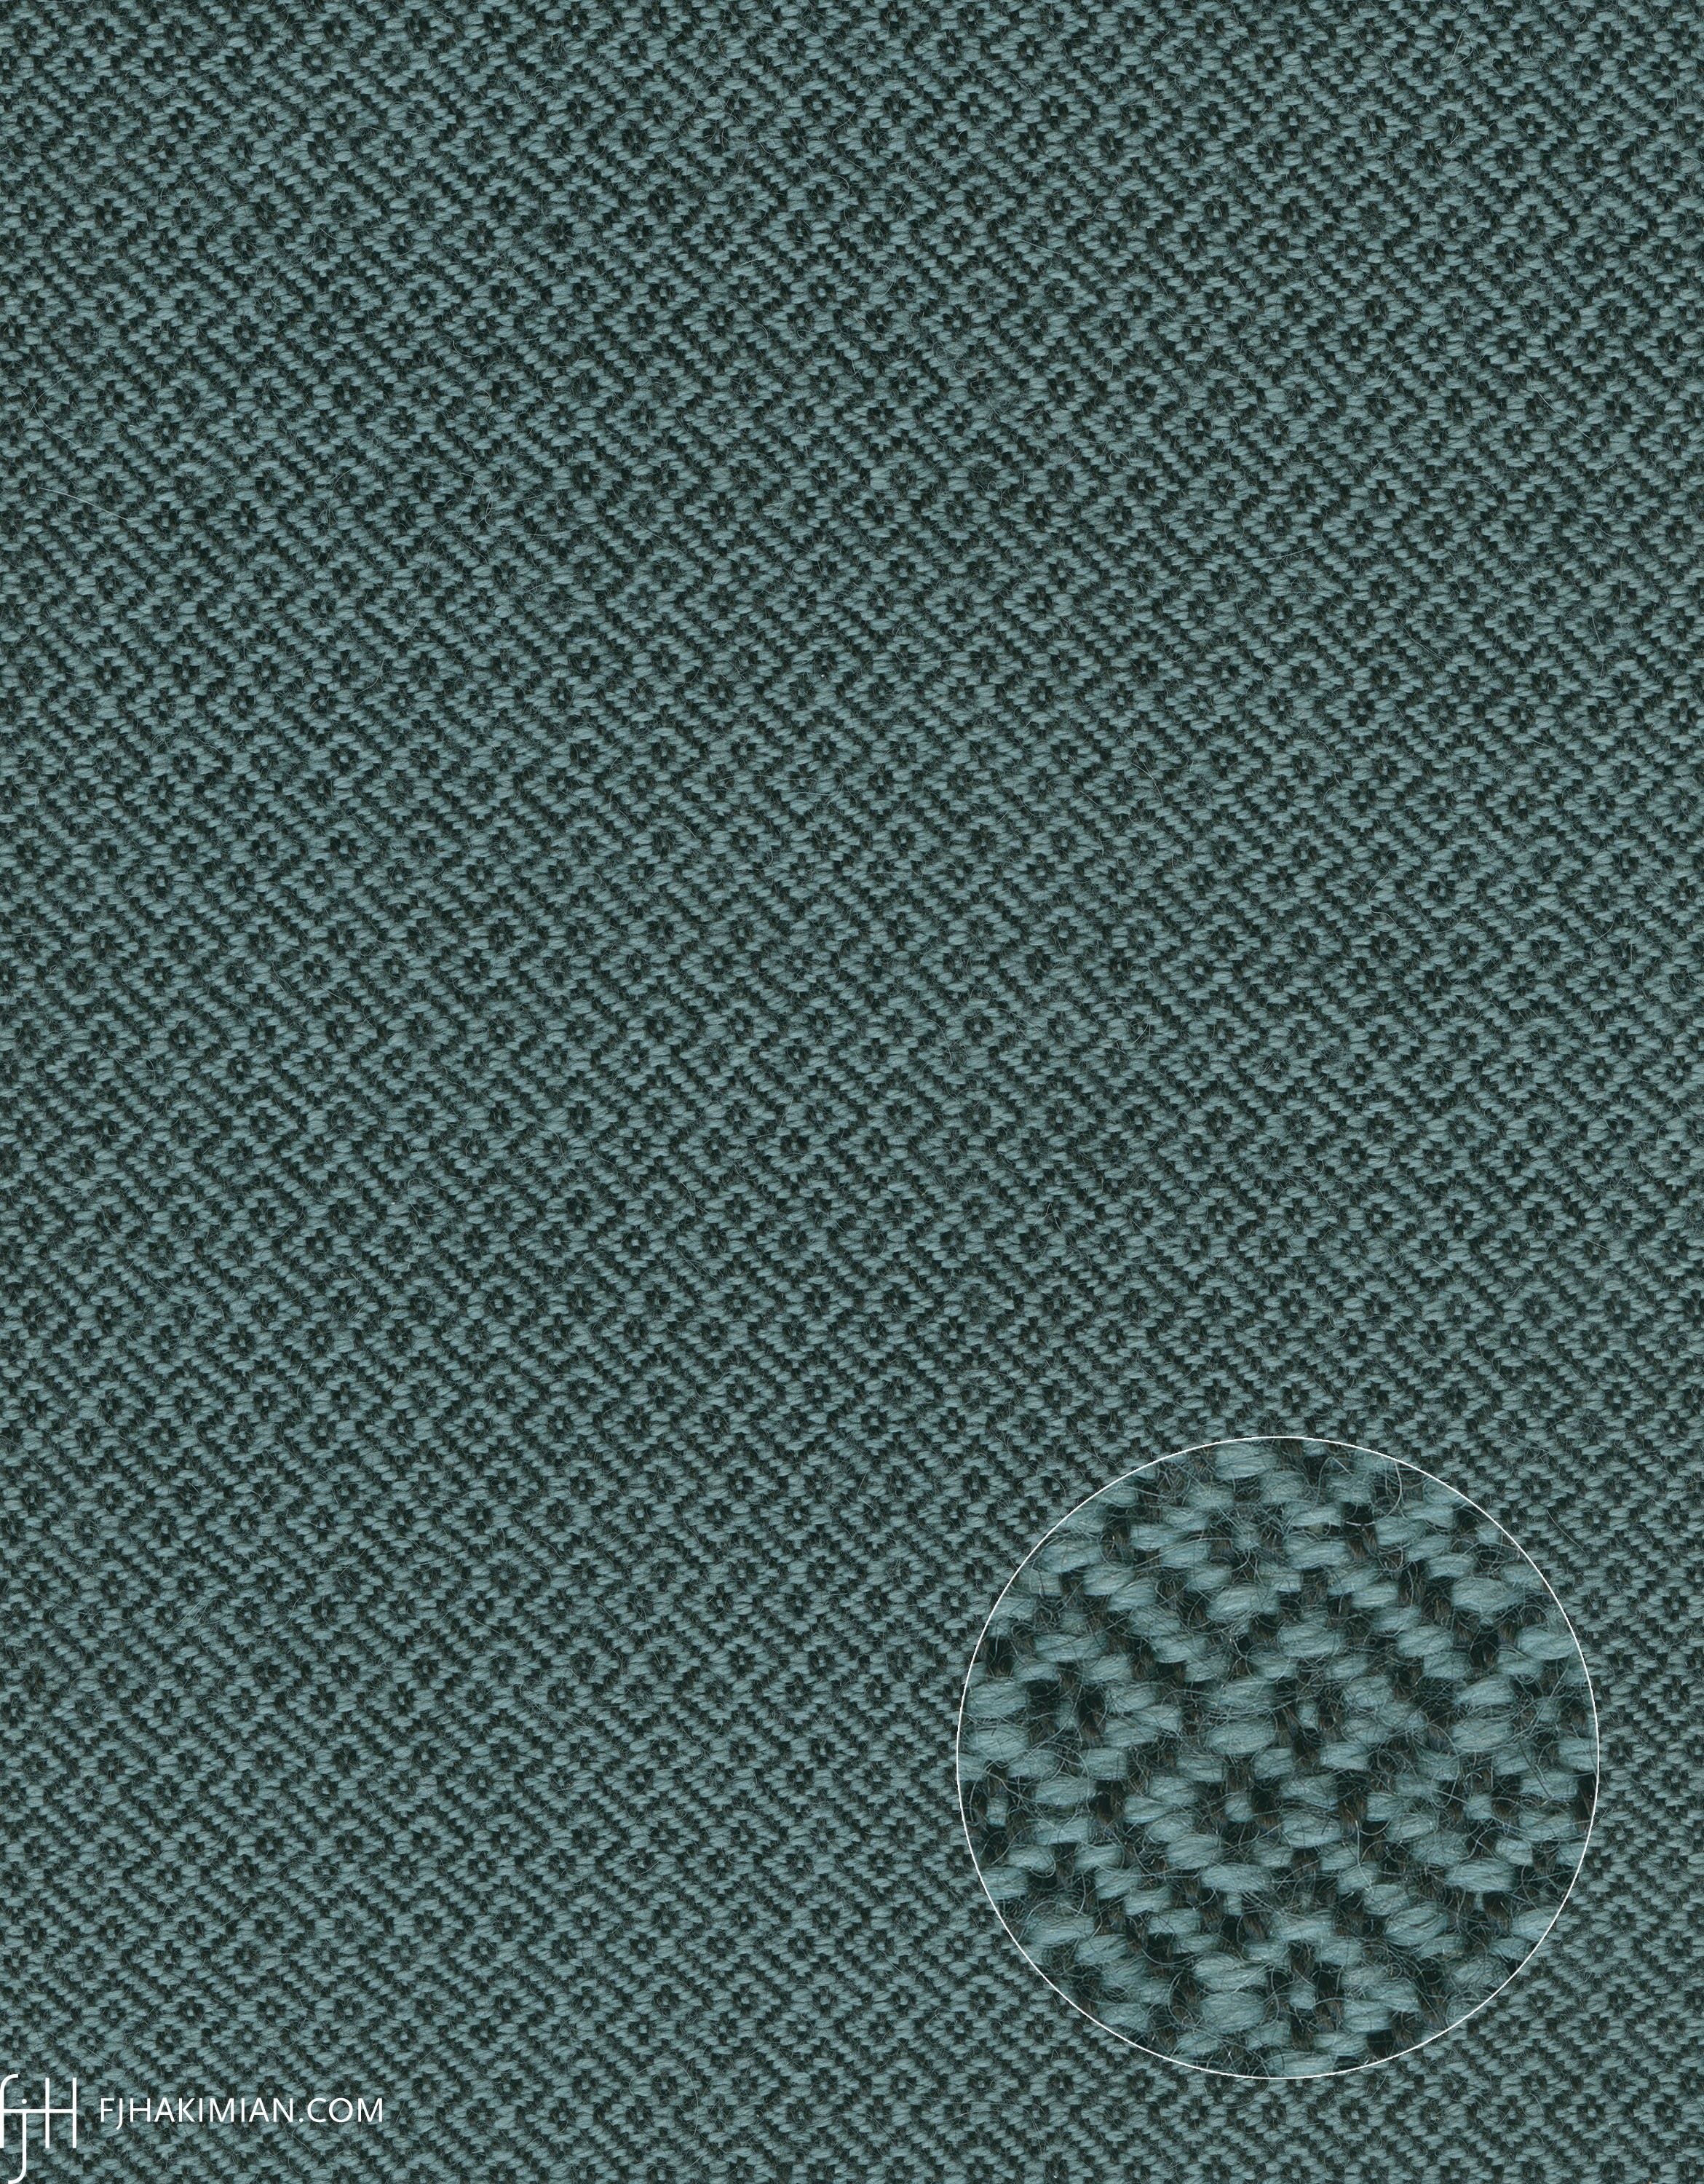 FTP-FHT-029500-AM7297) Honeycomb Throw Blanket | FJ Hakimian Carpet Gallery NYC